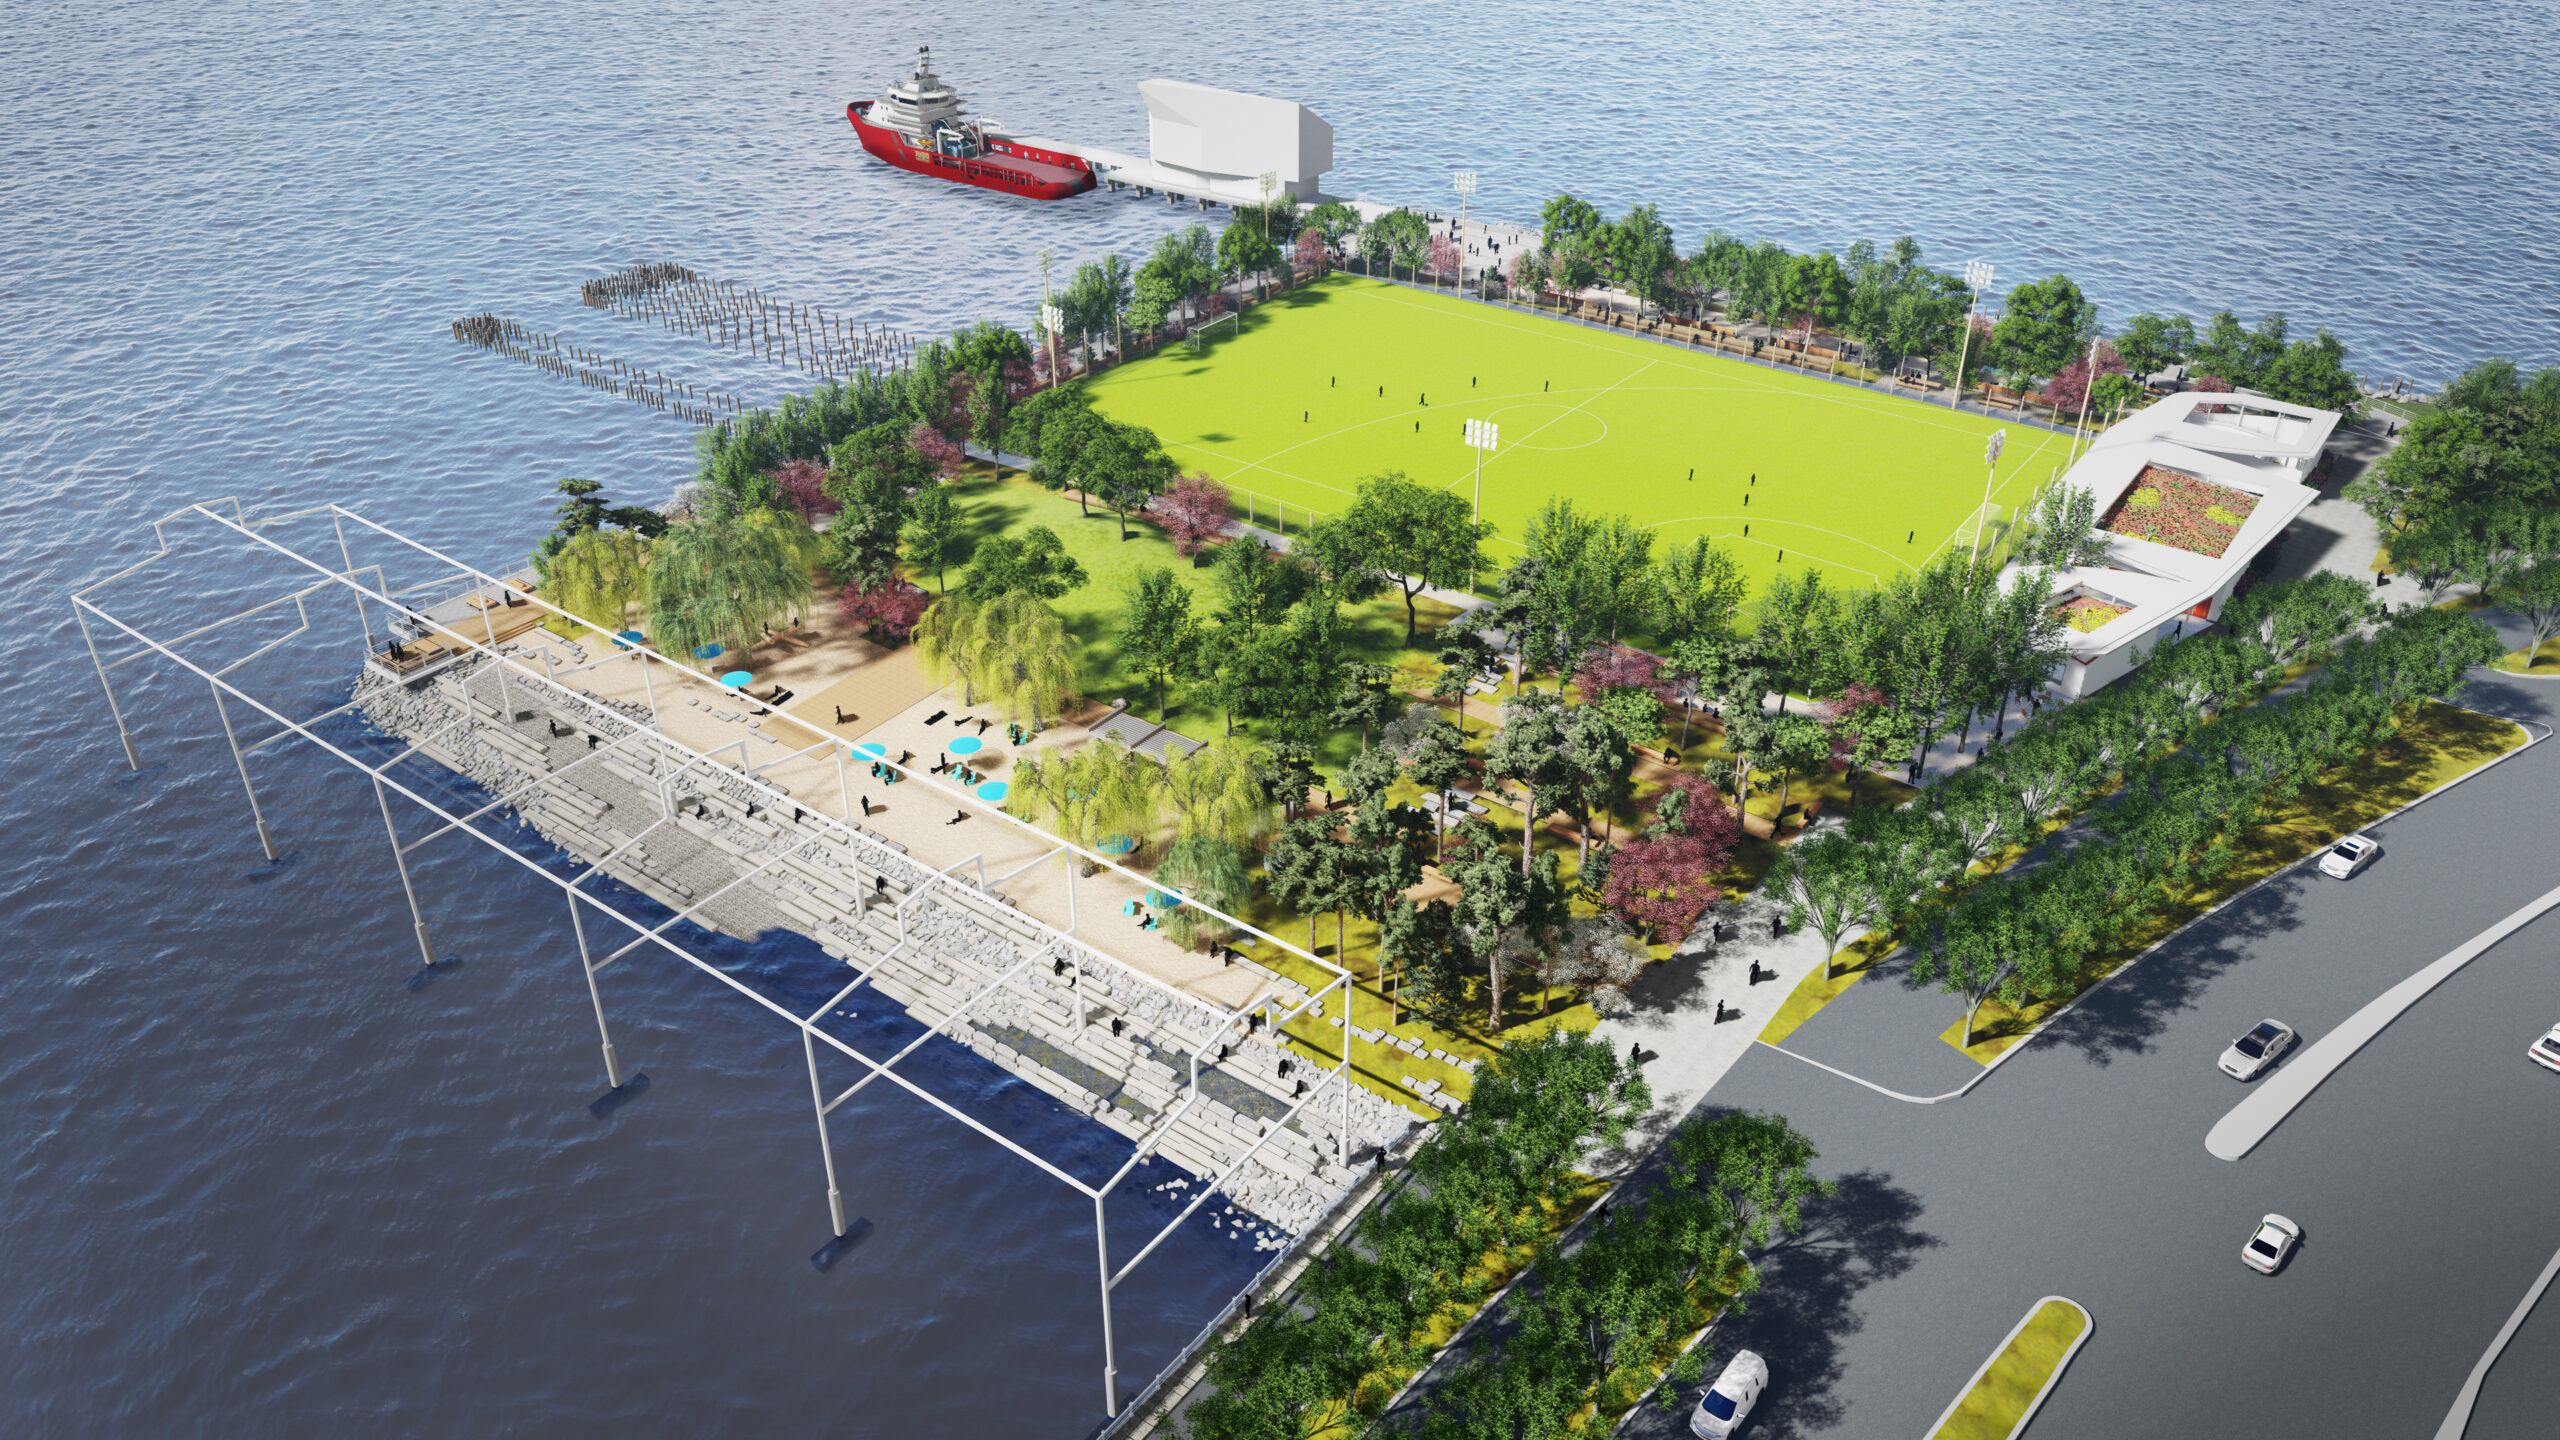 Gansevoort Peninsula opening in 2020 at HRPK